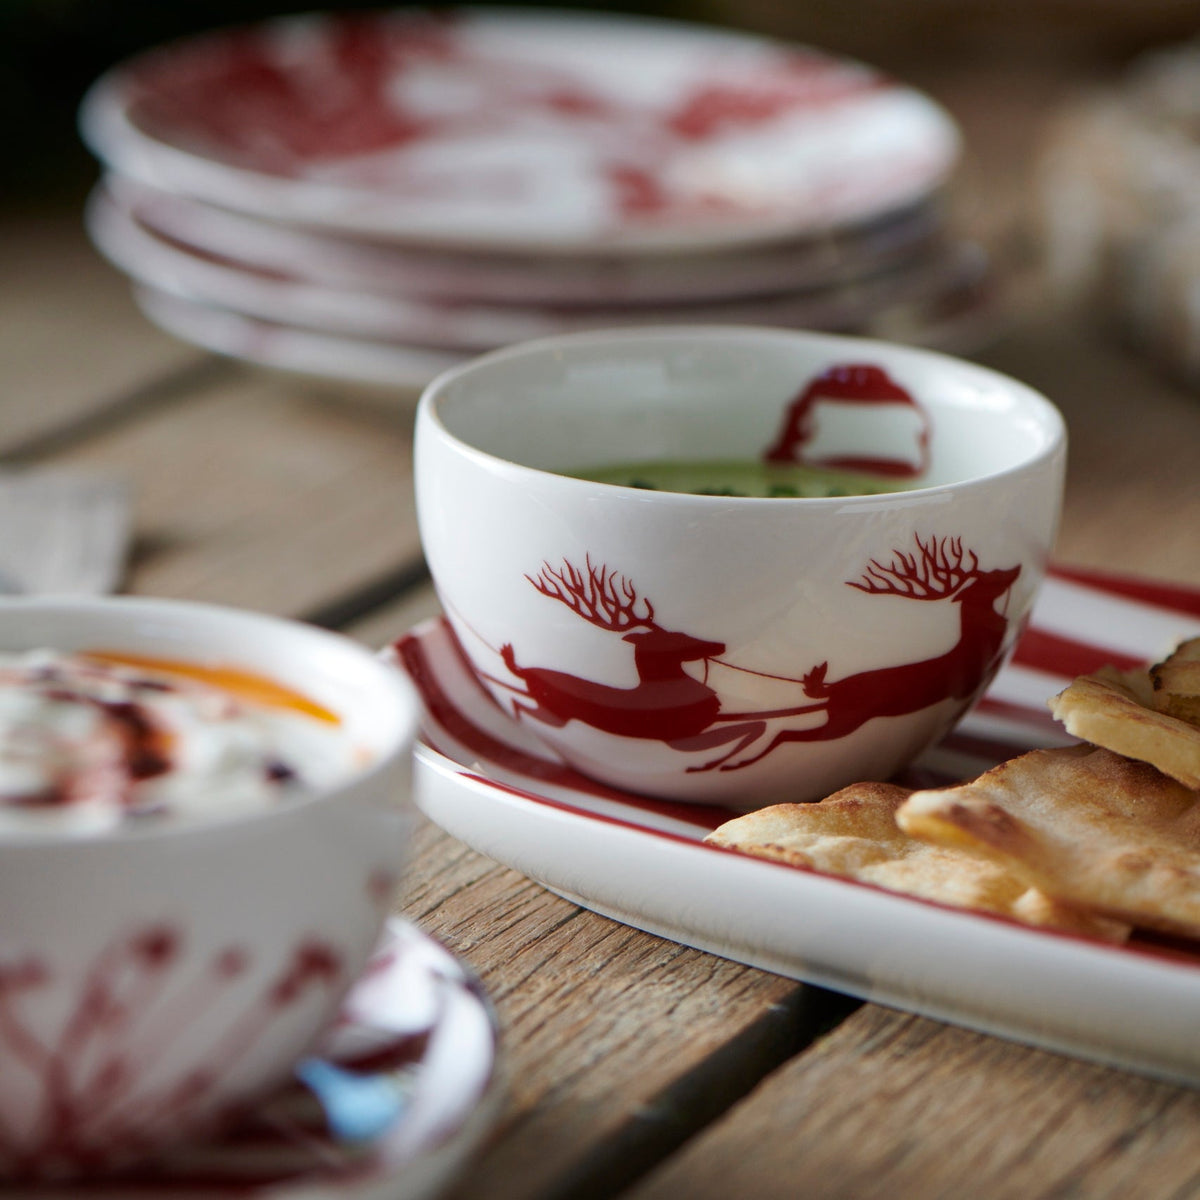 A festive Sleigh Snack Bowl from Caskata Artisanal Home on a table, evoking holiday spirits.